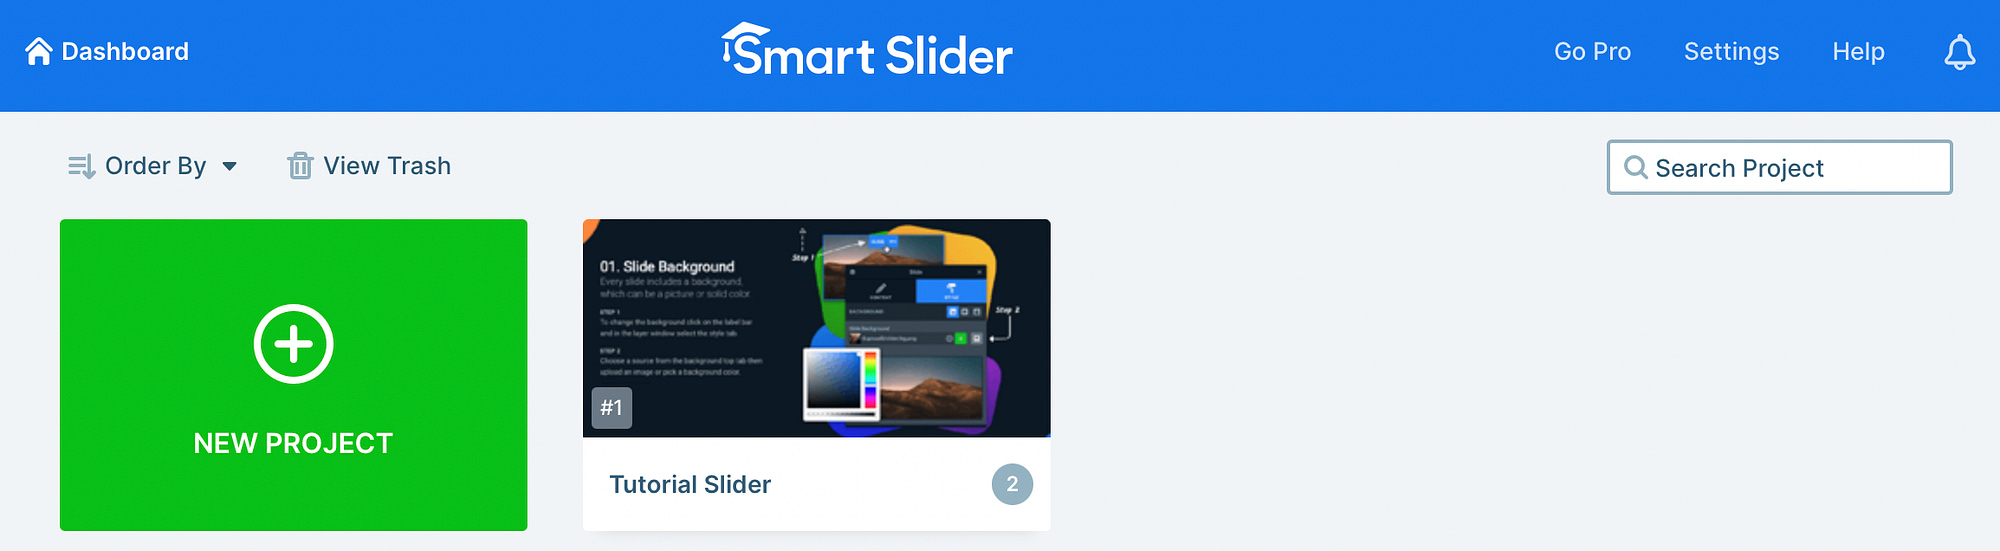 Smart Slider dashboard.